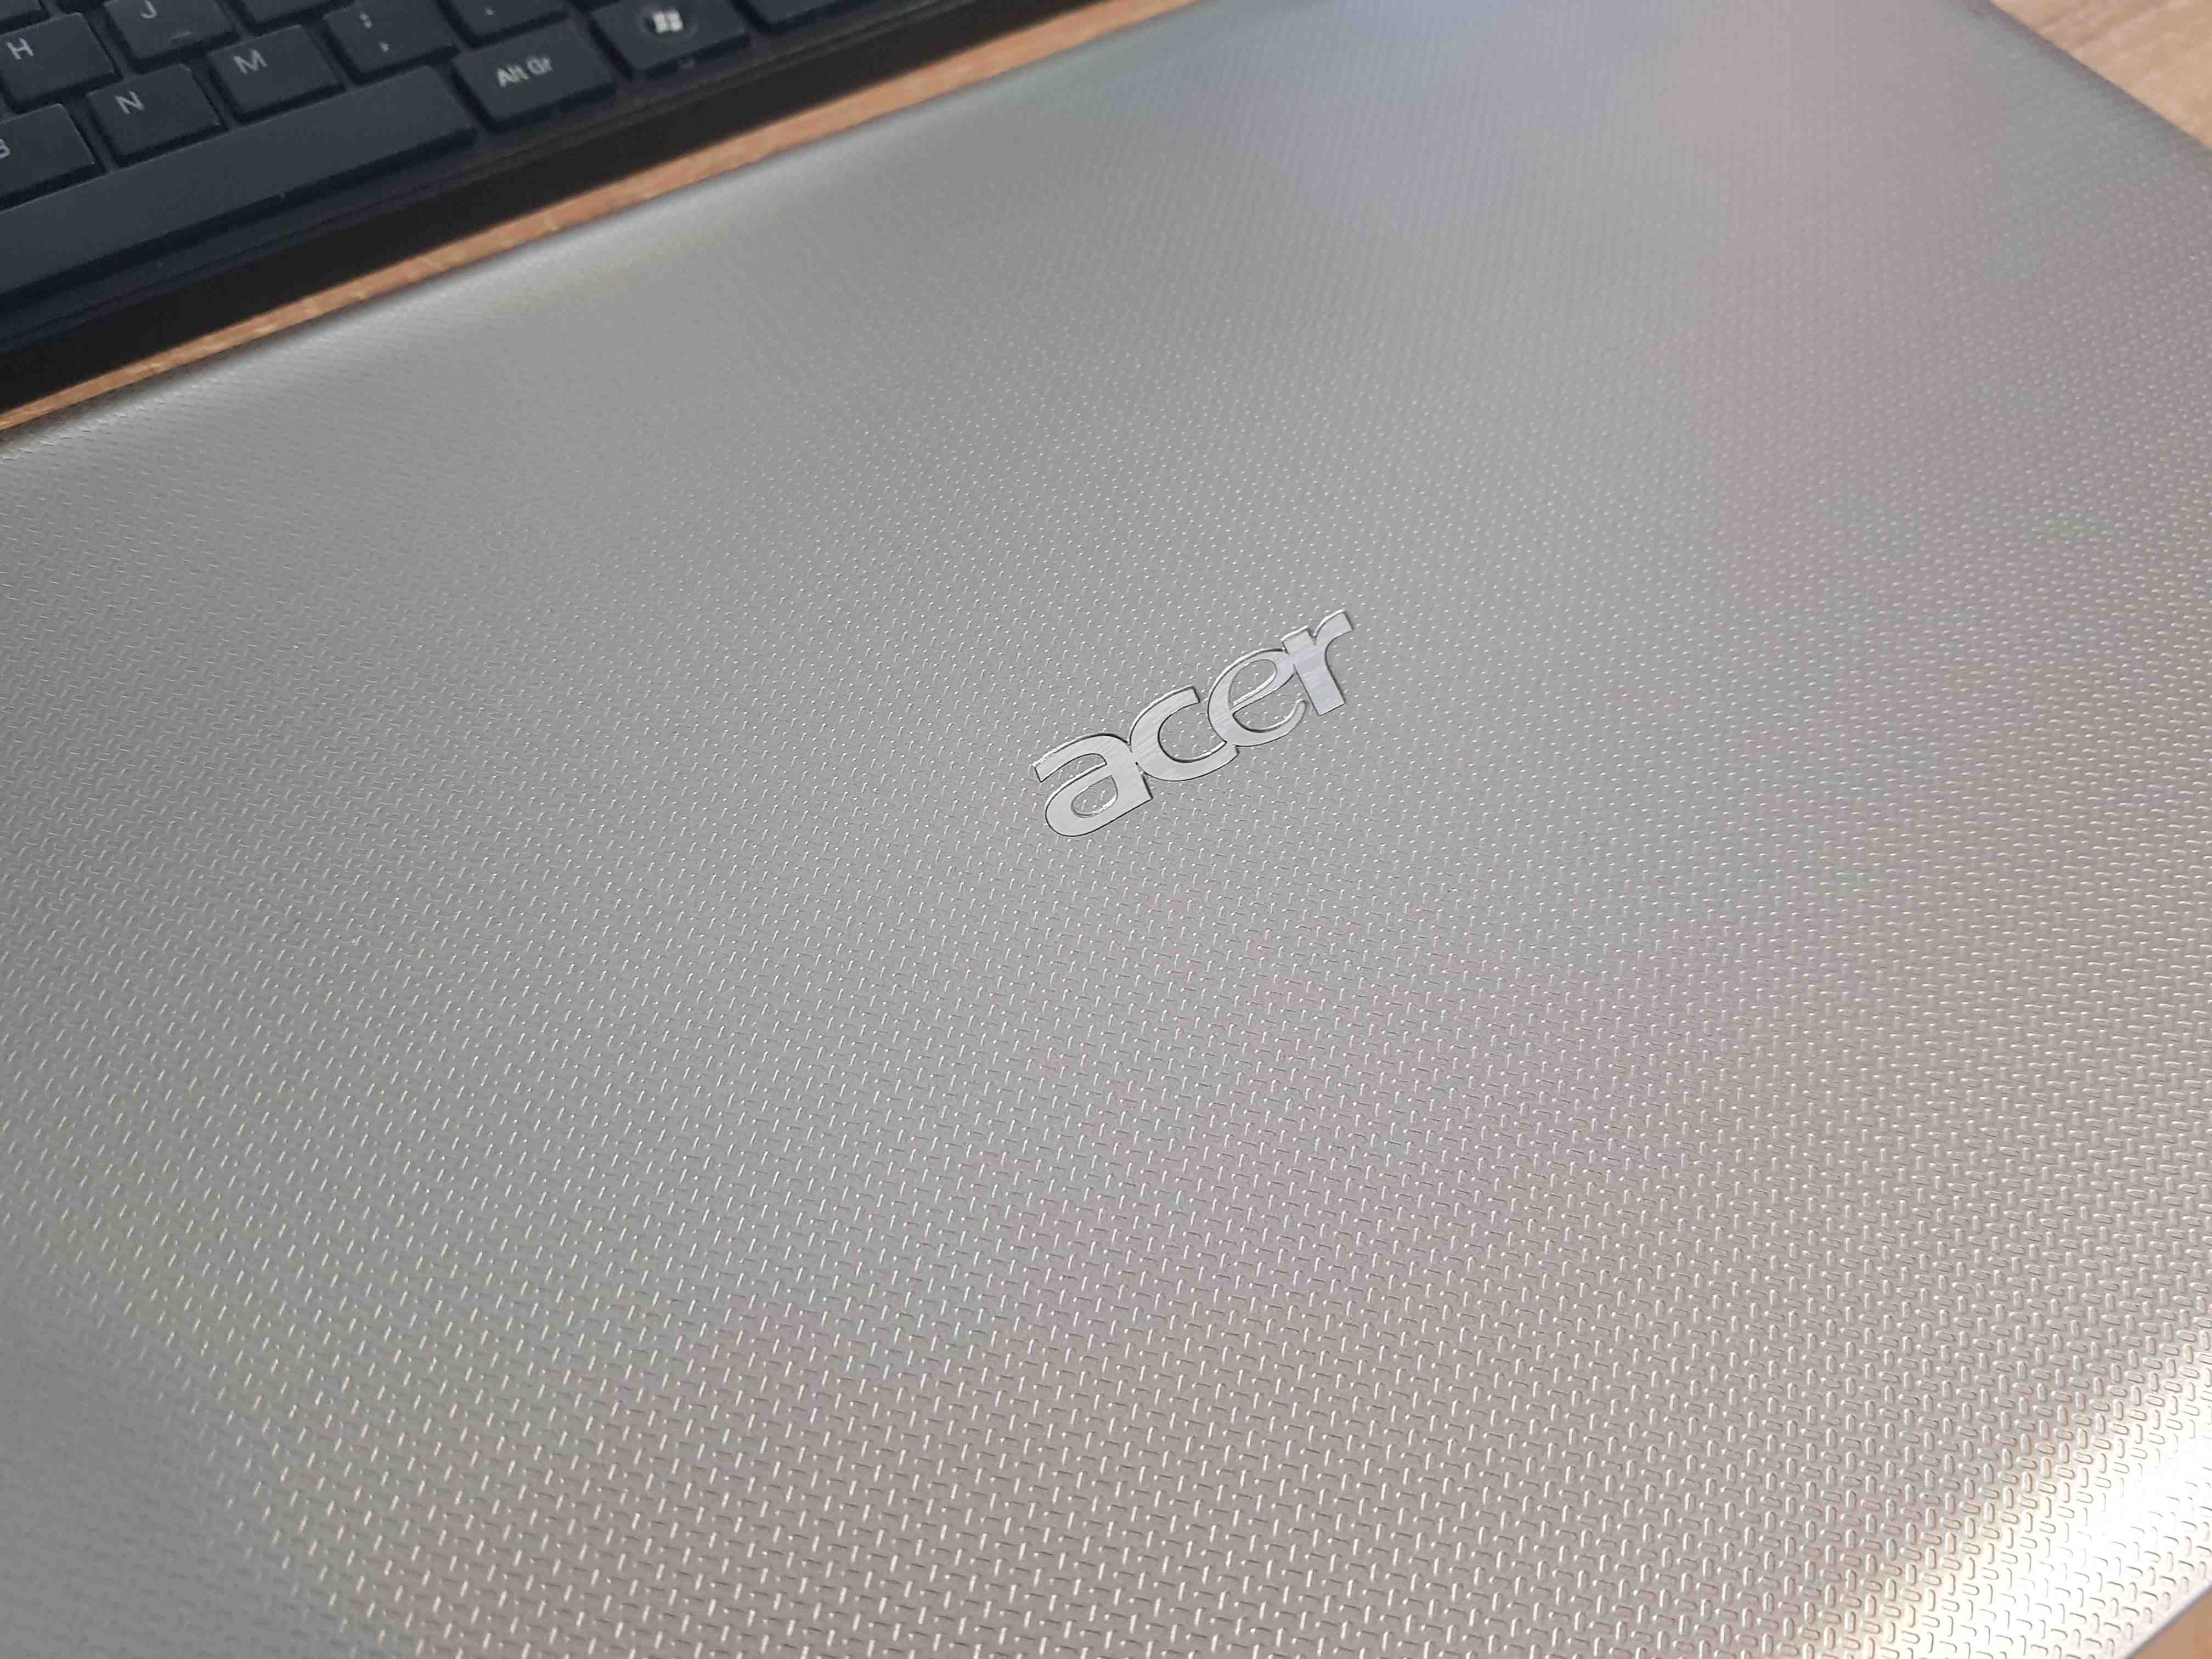 Acer Marque Reparation 